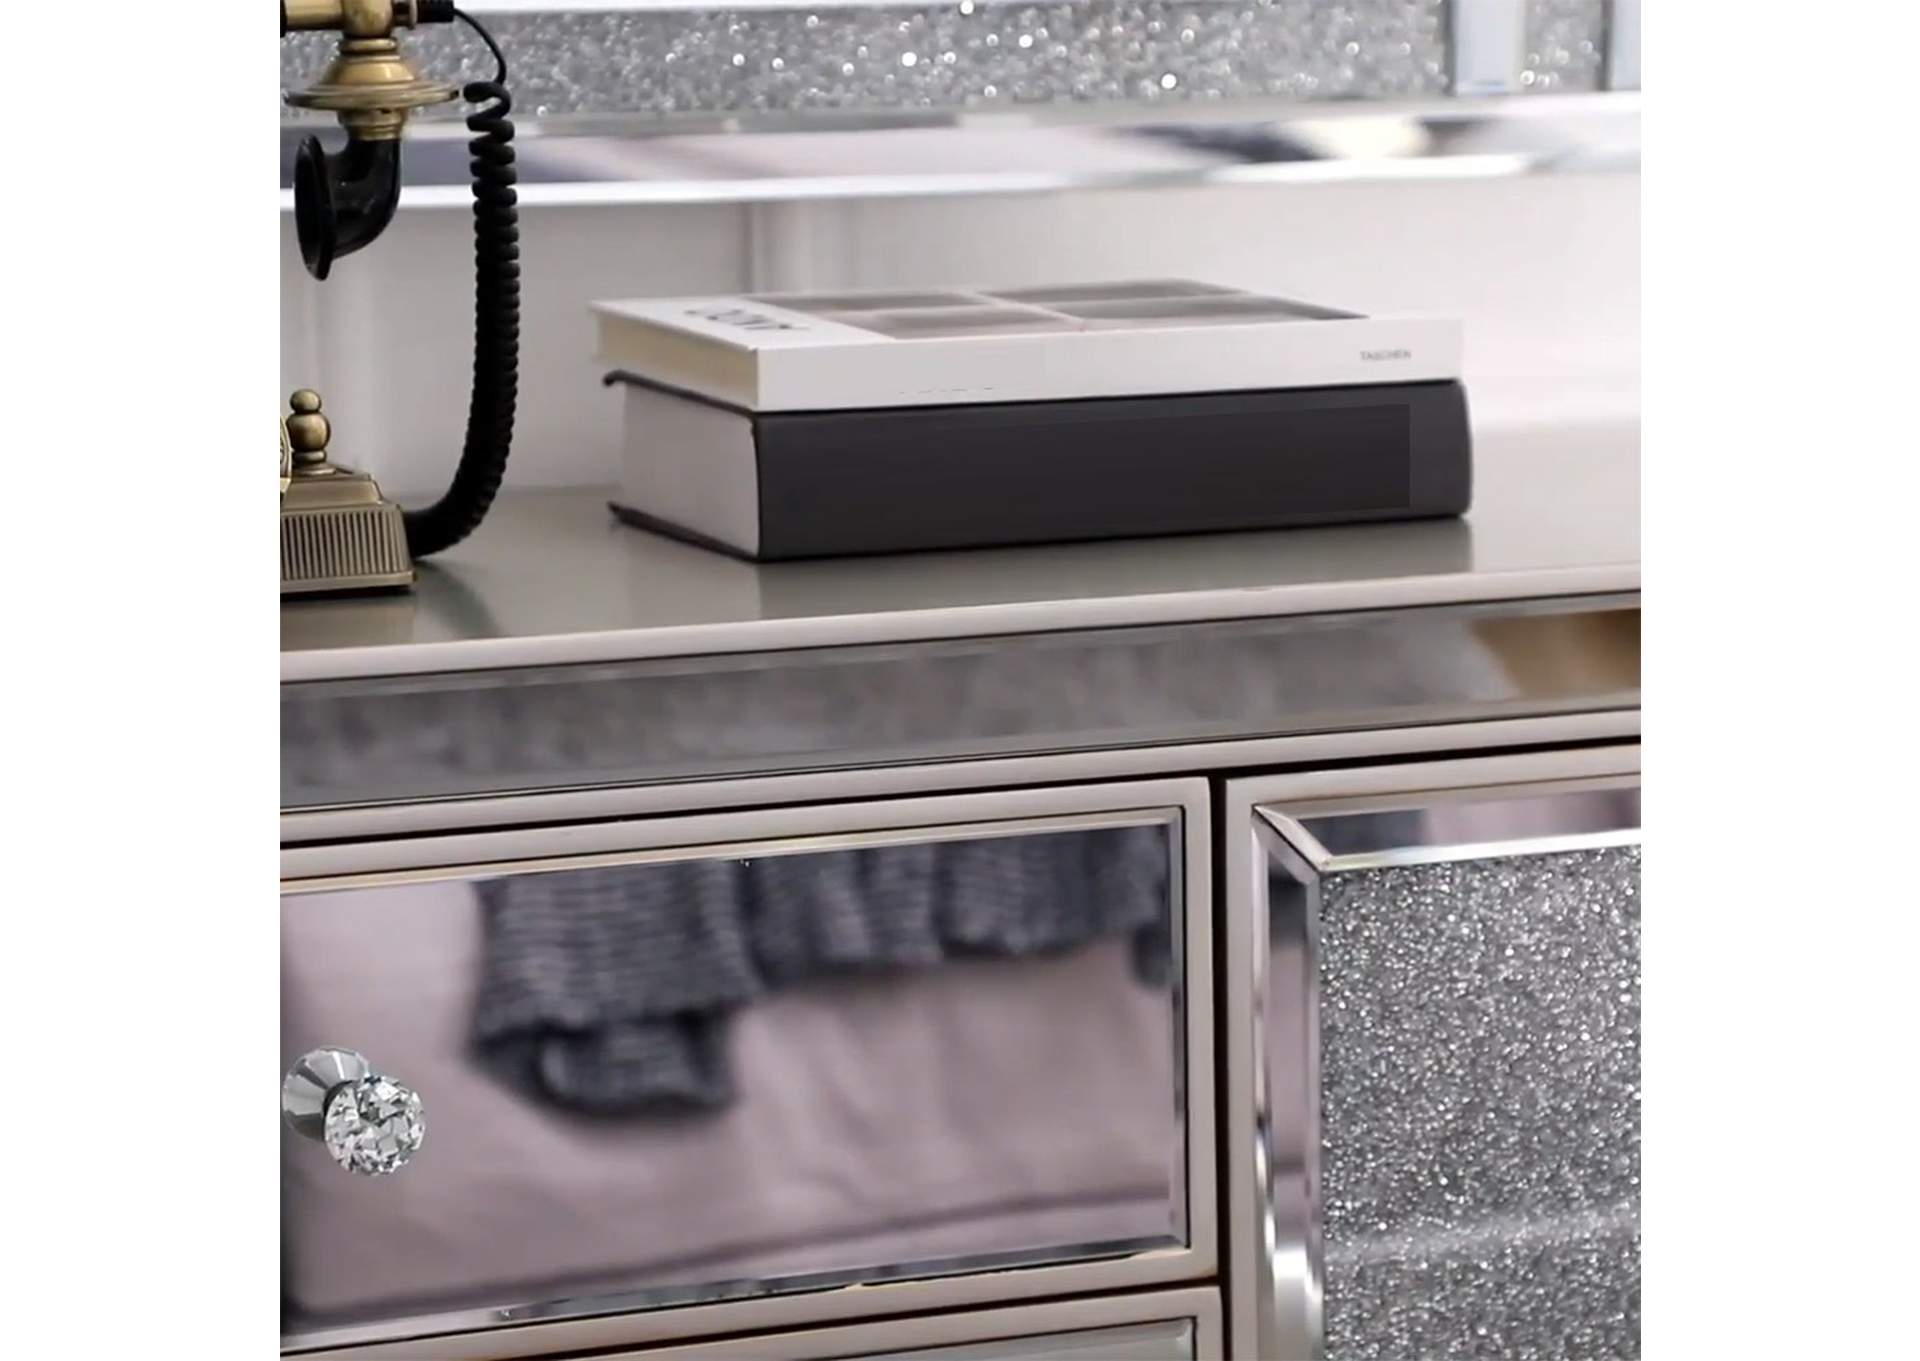 Champagne Silver 5 Piece Bedroom Set,Homey Design